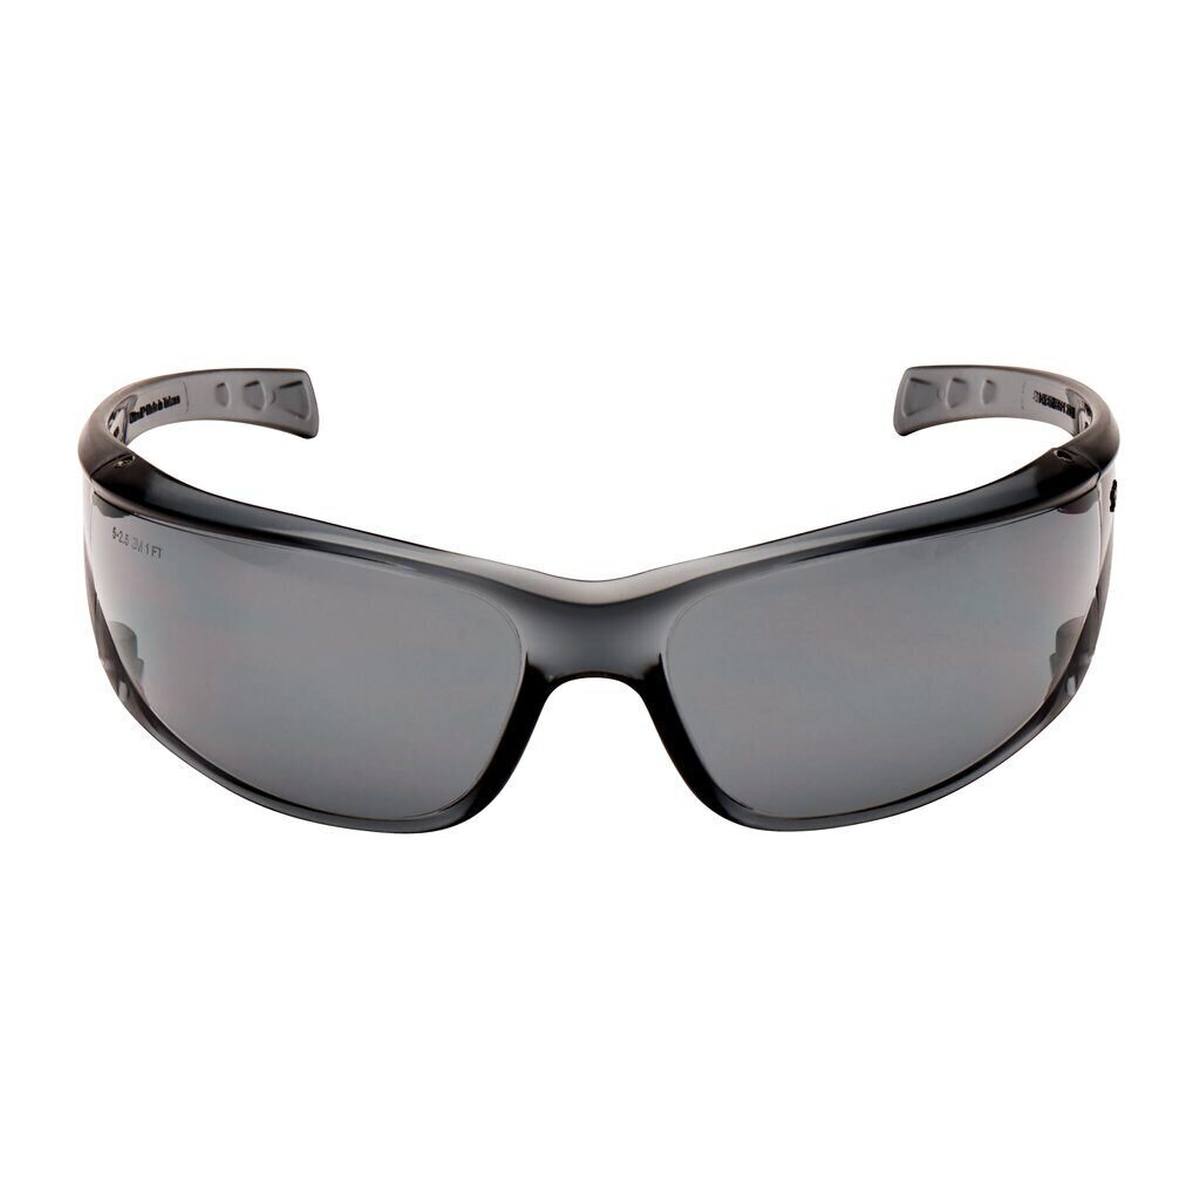 3M Virtua AP safety goggles, grey, VIRG